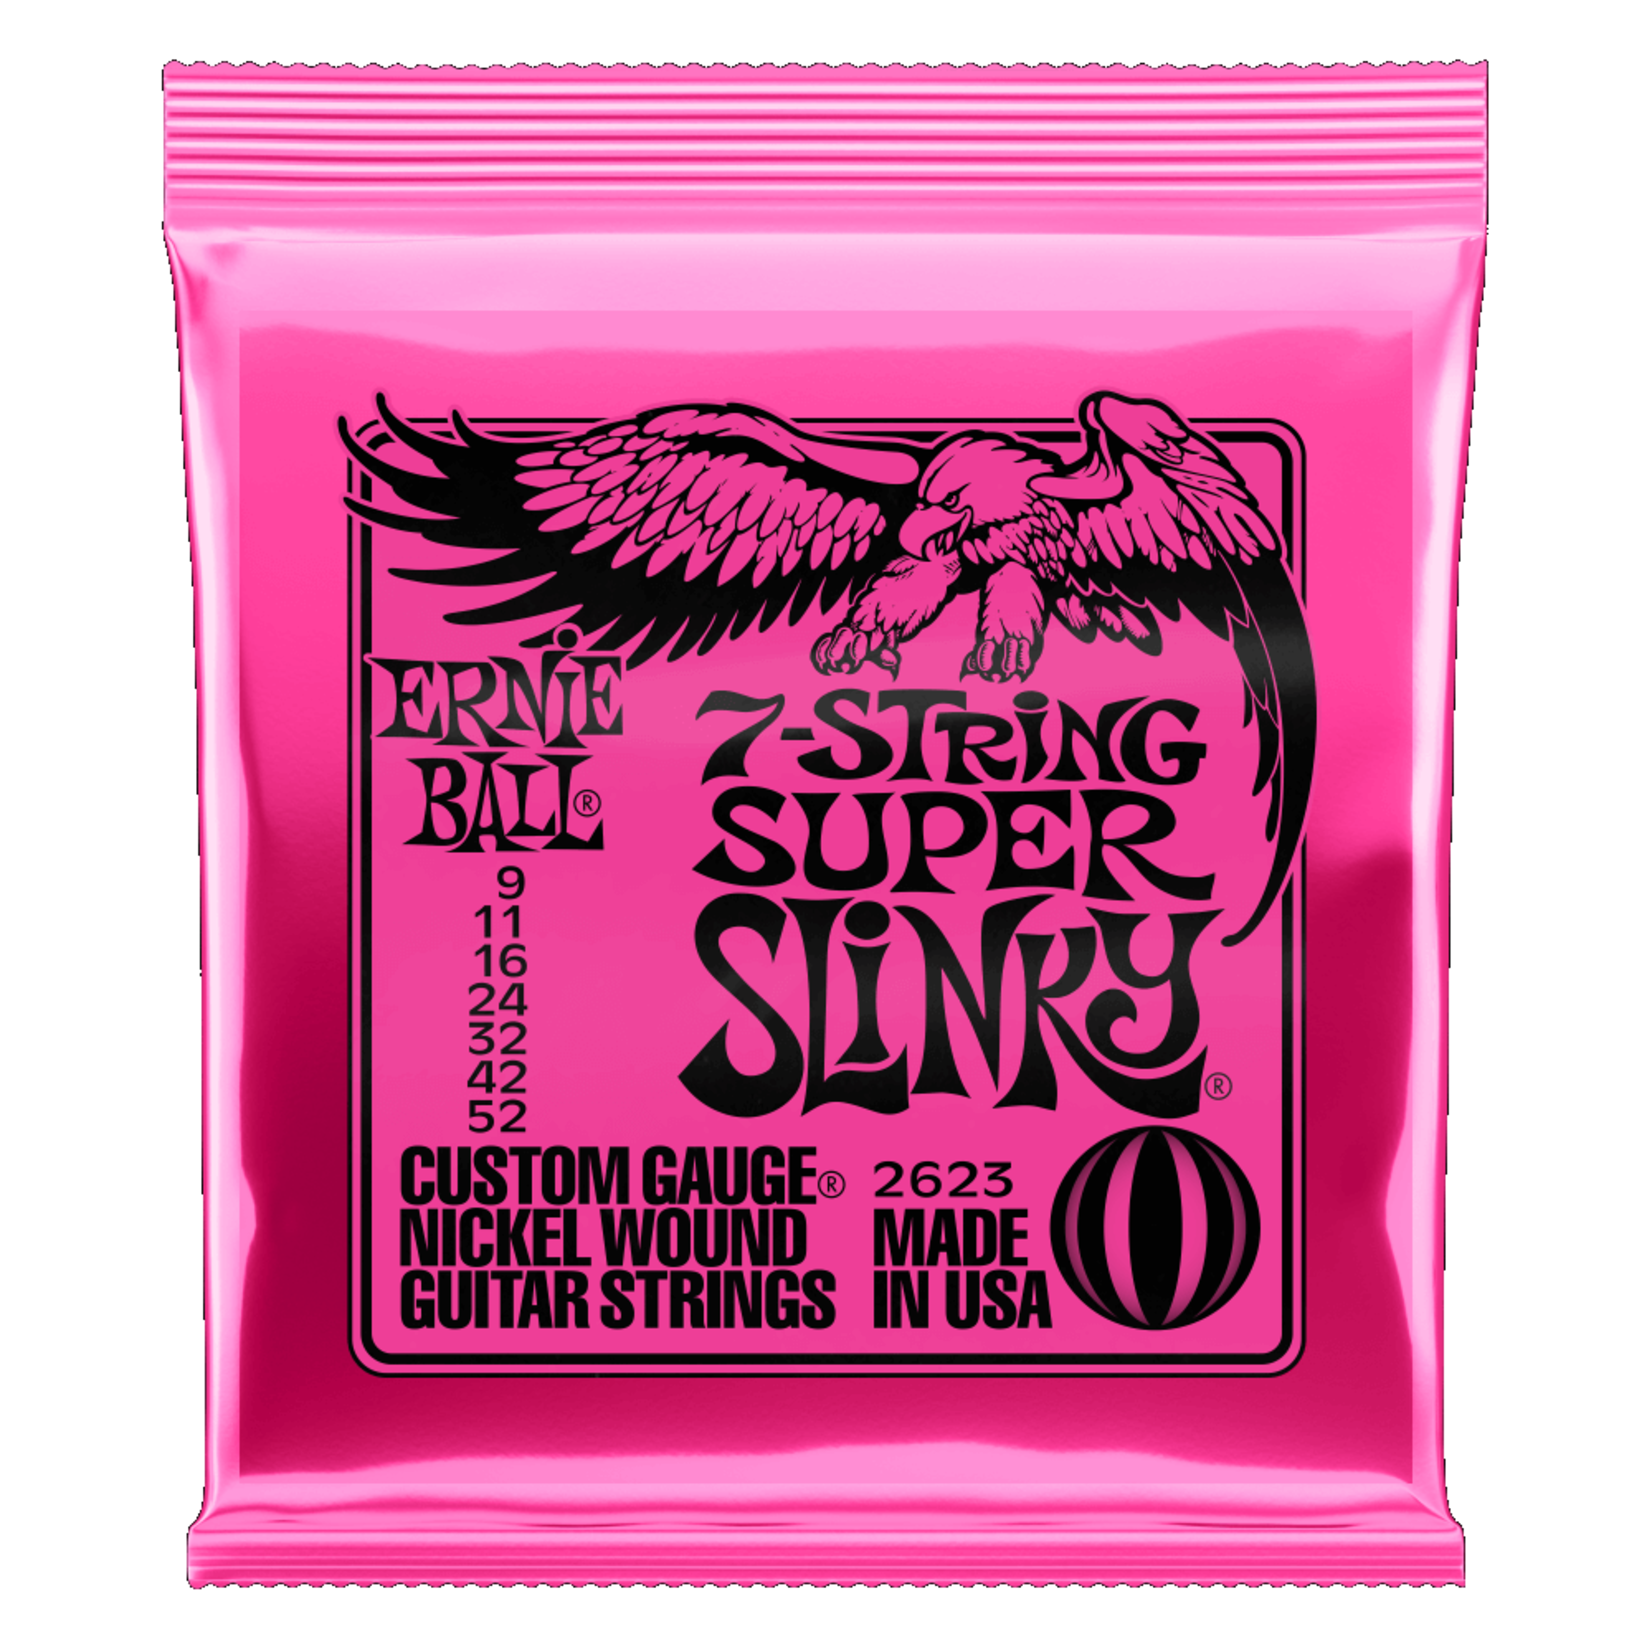 Ernie Ball 7-String Super Slinky Electric Guitar Strings 9-52